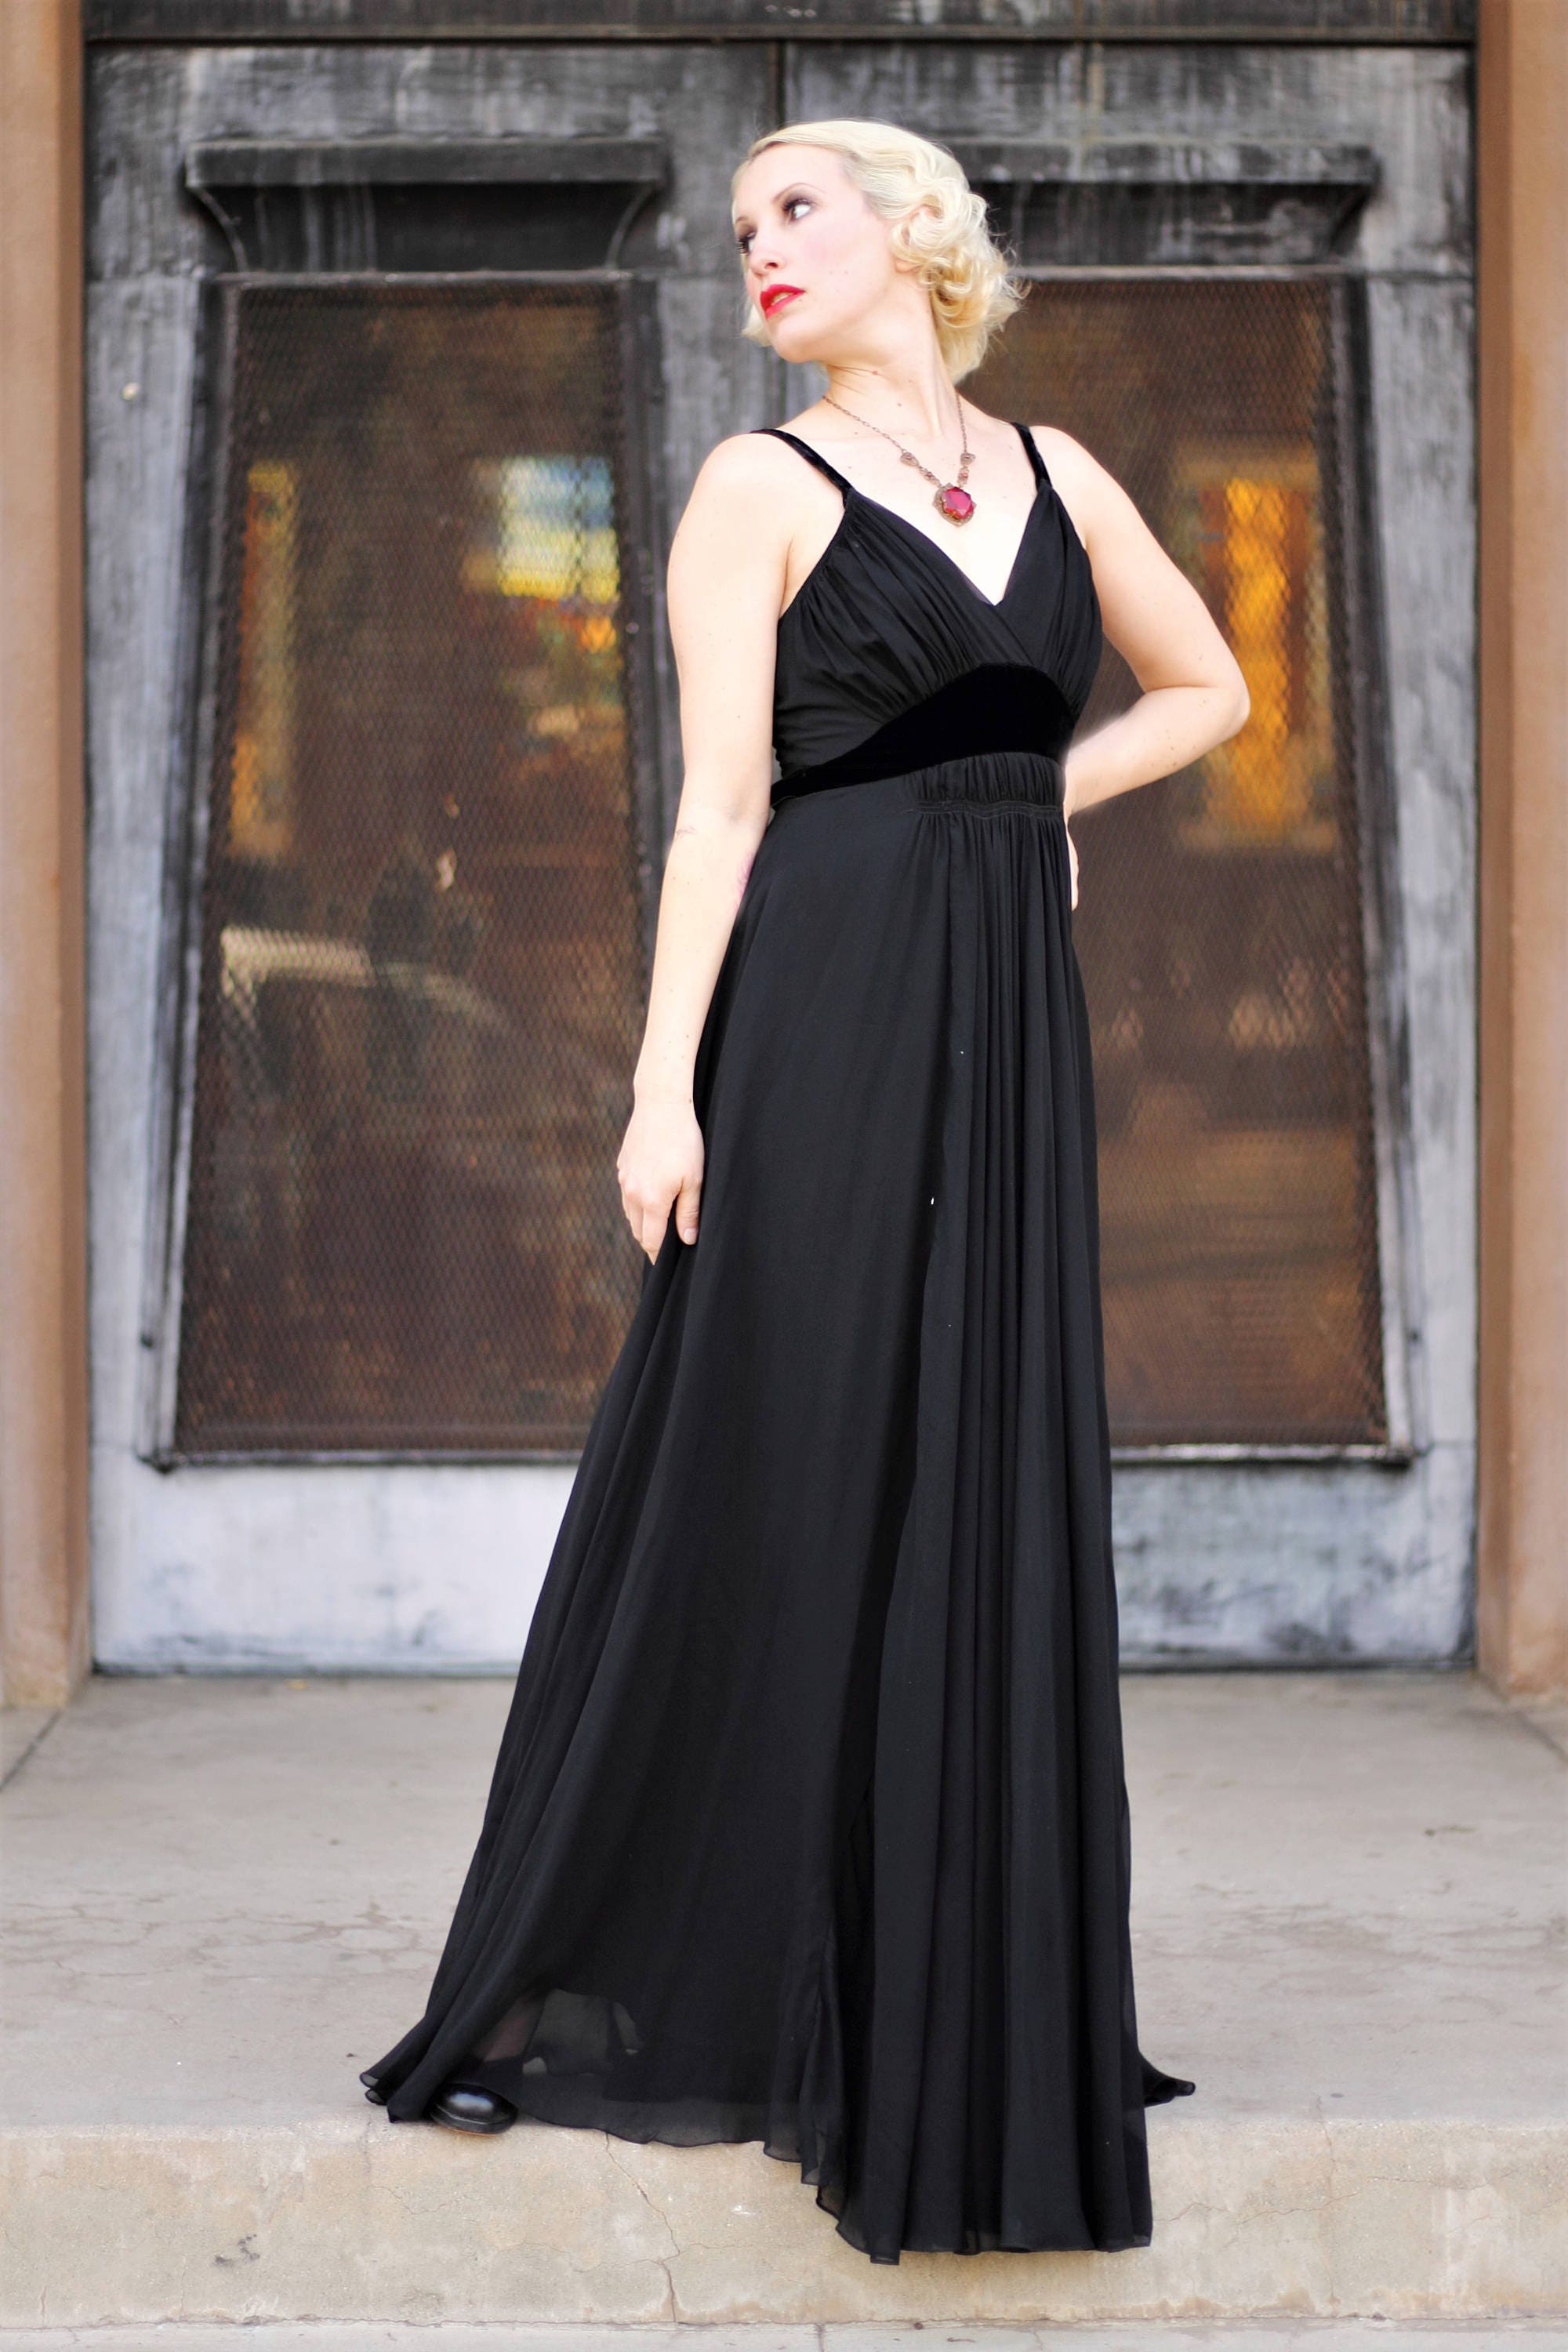 June + Vie By Roaman's Women's Plus Size Florynce Empire Waist Dress -  18/20, Black : Target